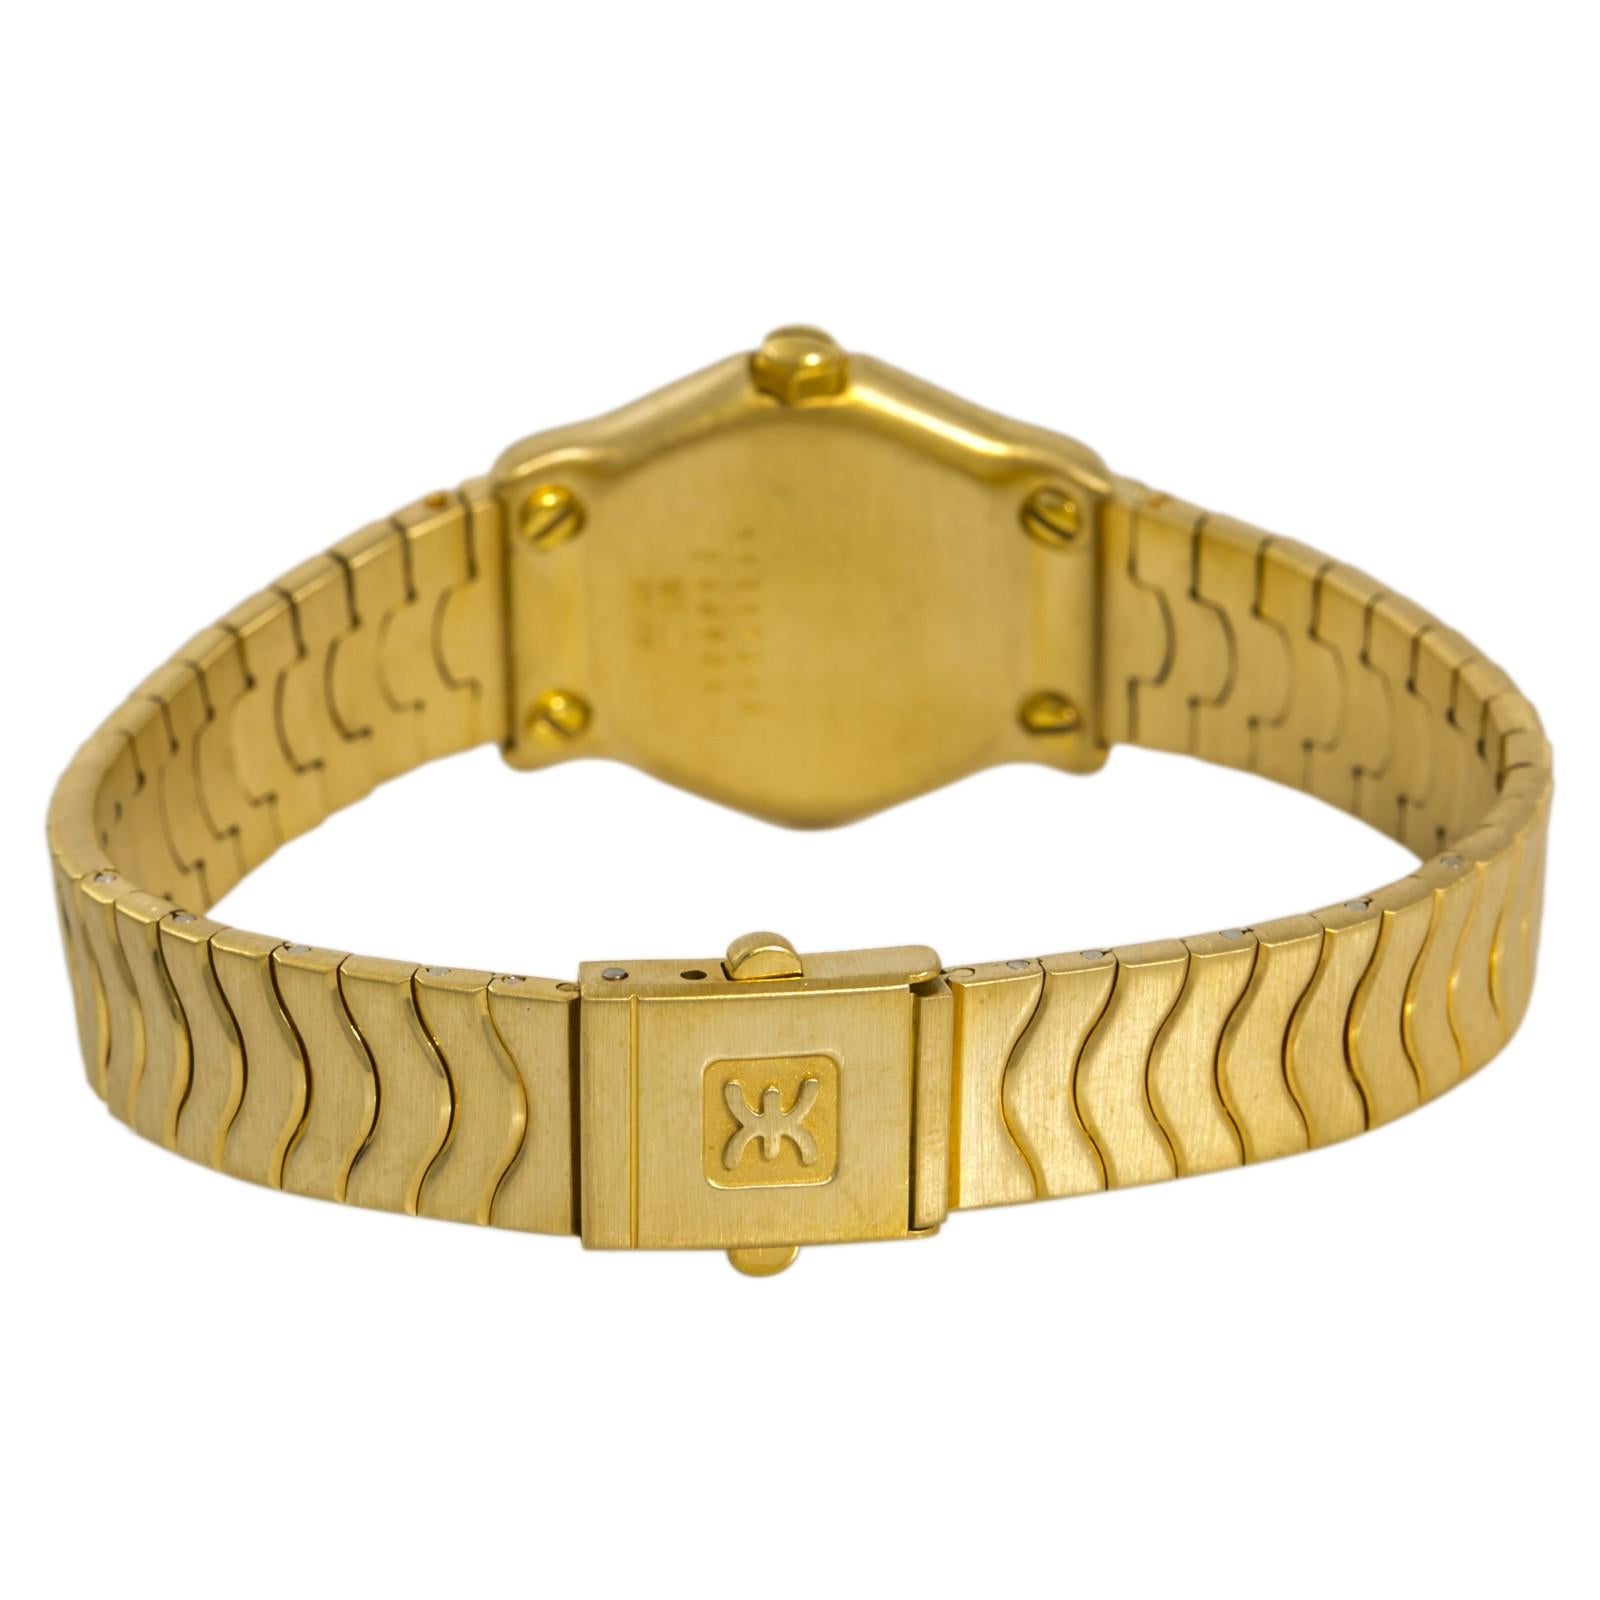 Contemporary Ebel Classic Sport Wave Women's 18 Karat Yellow Gold Quartz Watch Diamond Bezel